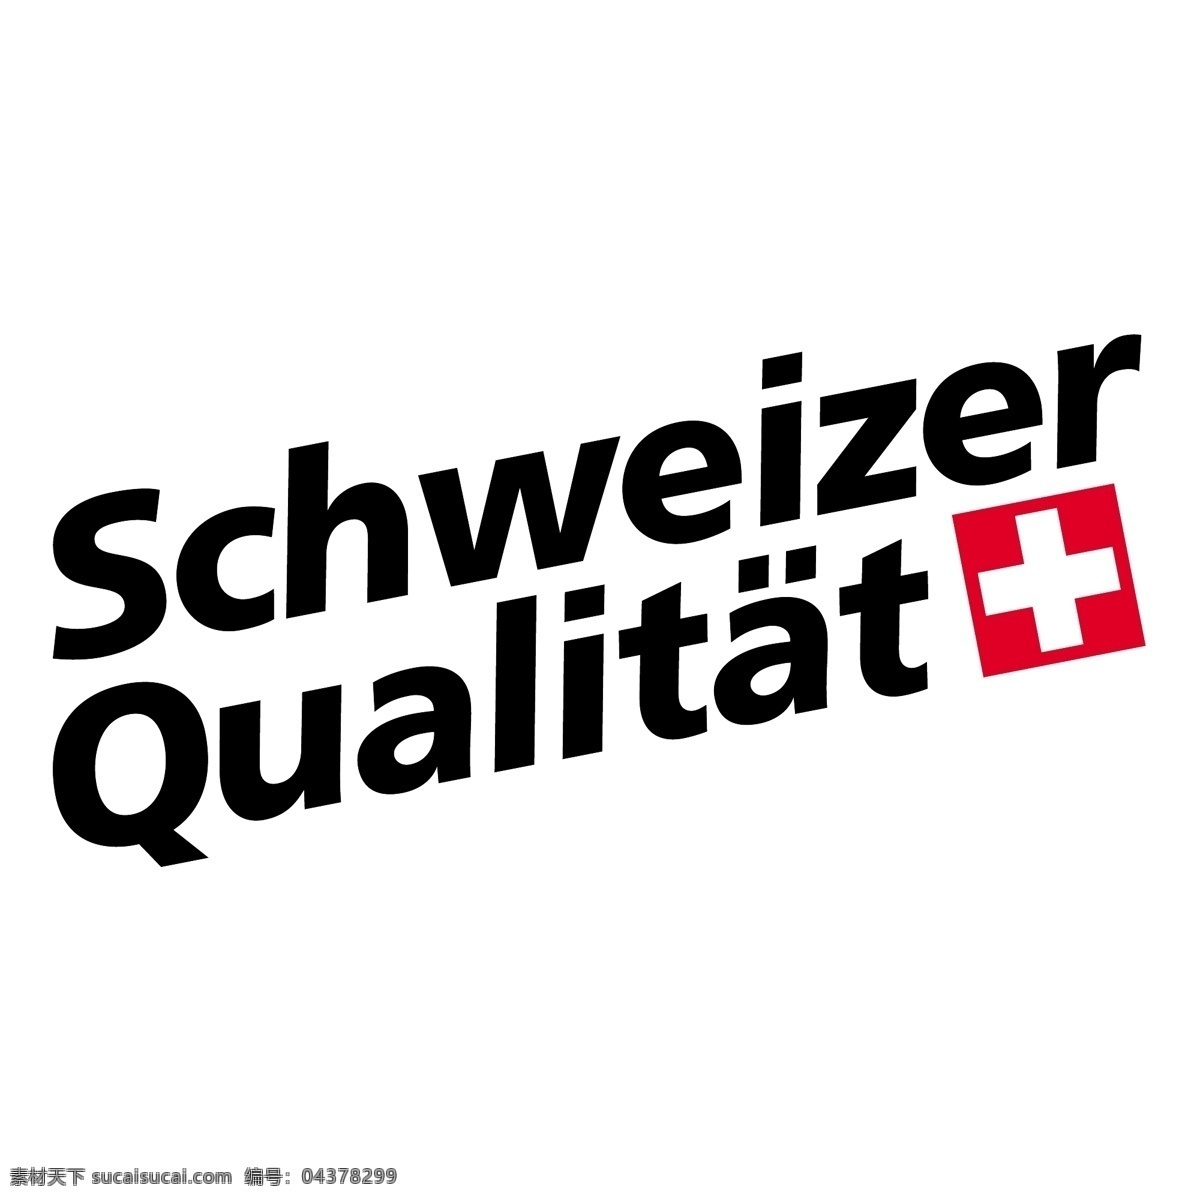 瑞士 瑞士质量 质量 瑞士eps eps向量 向量瑞士 瑞士f 白色